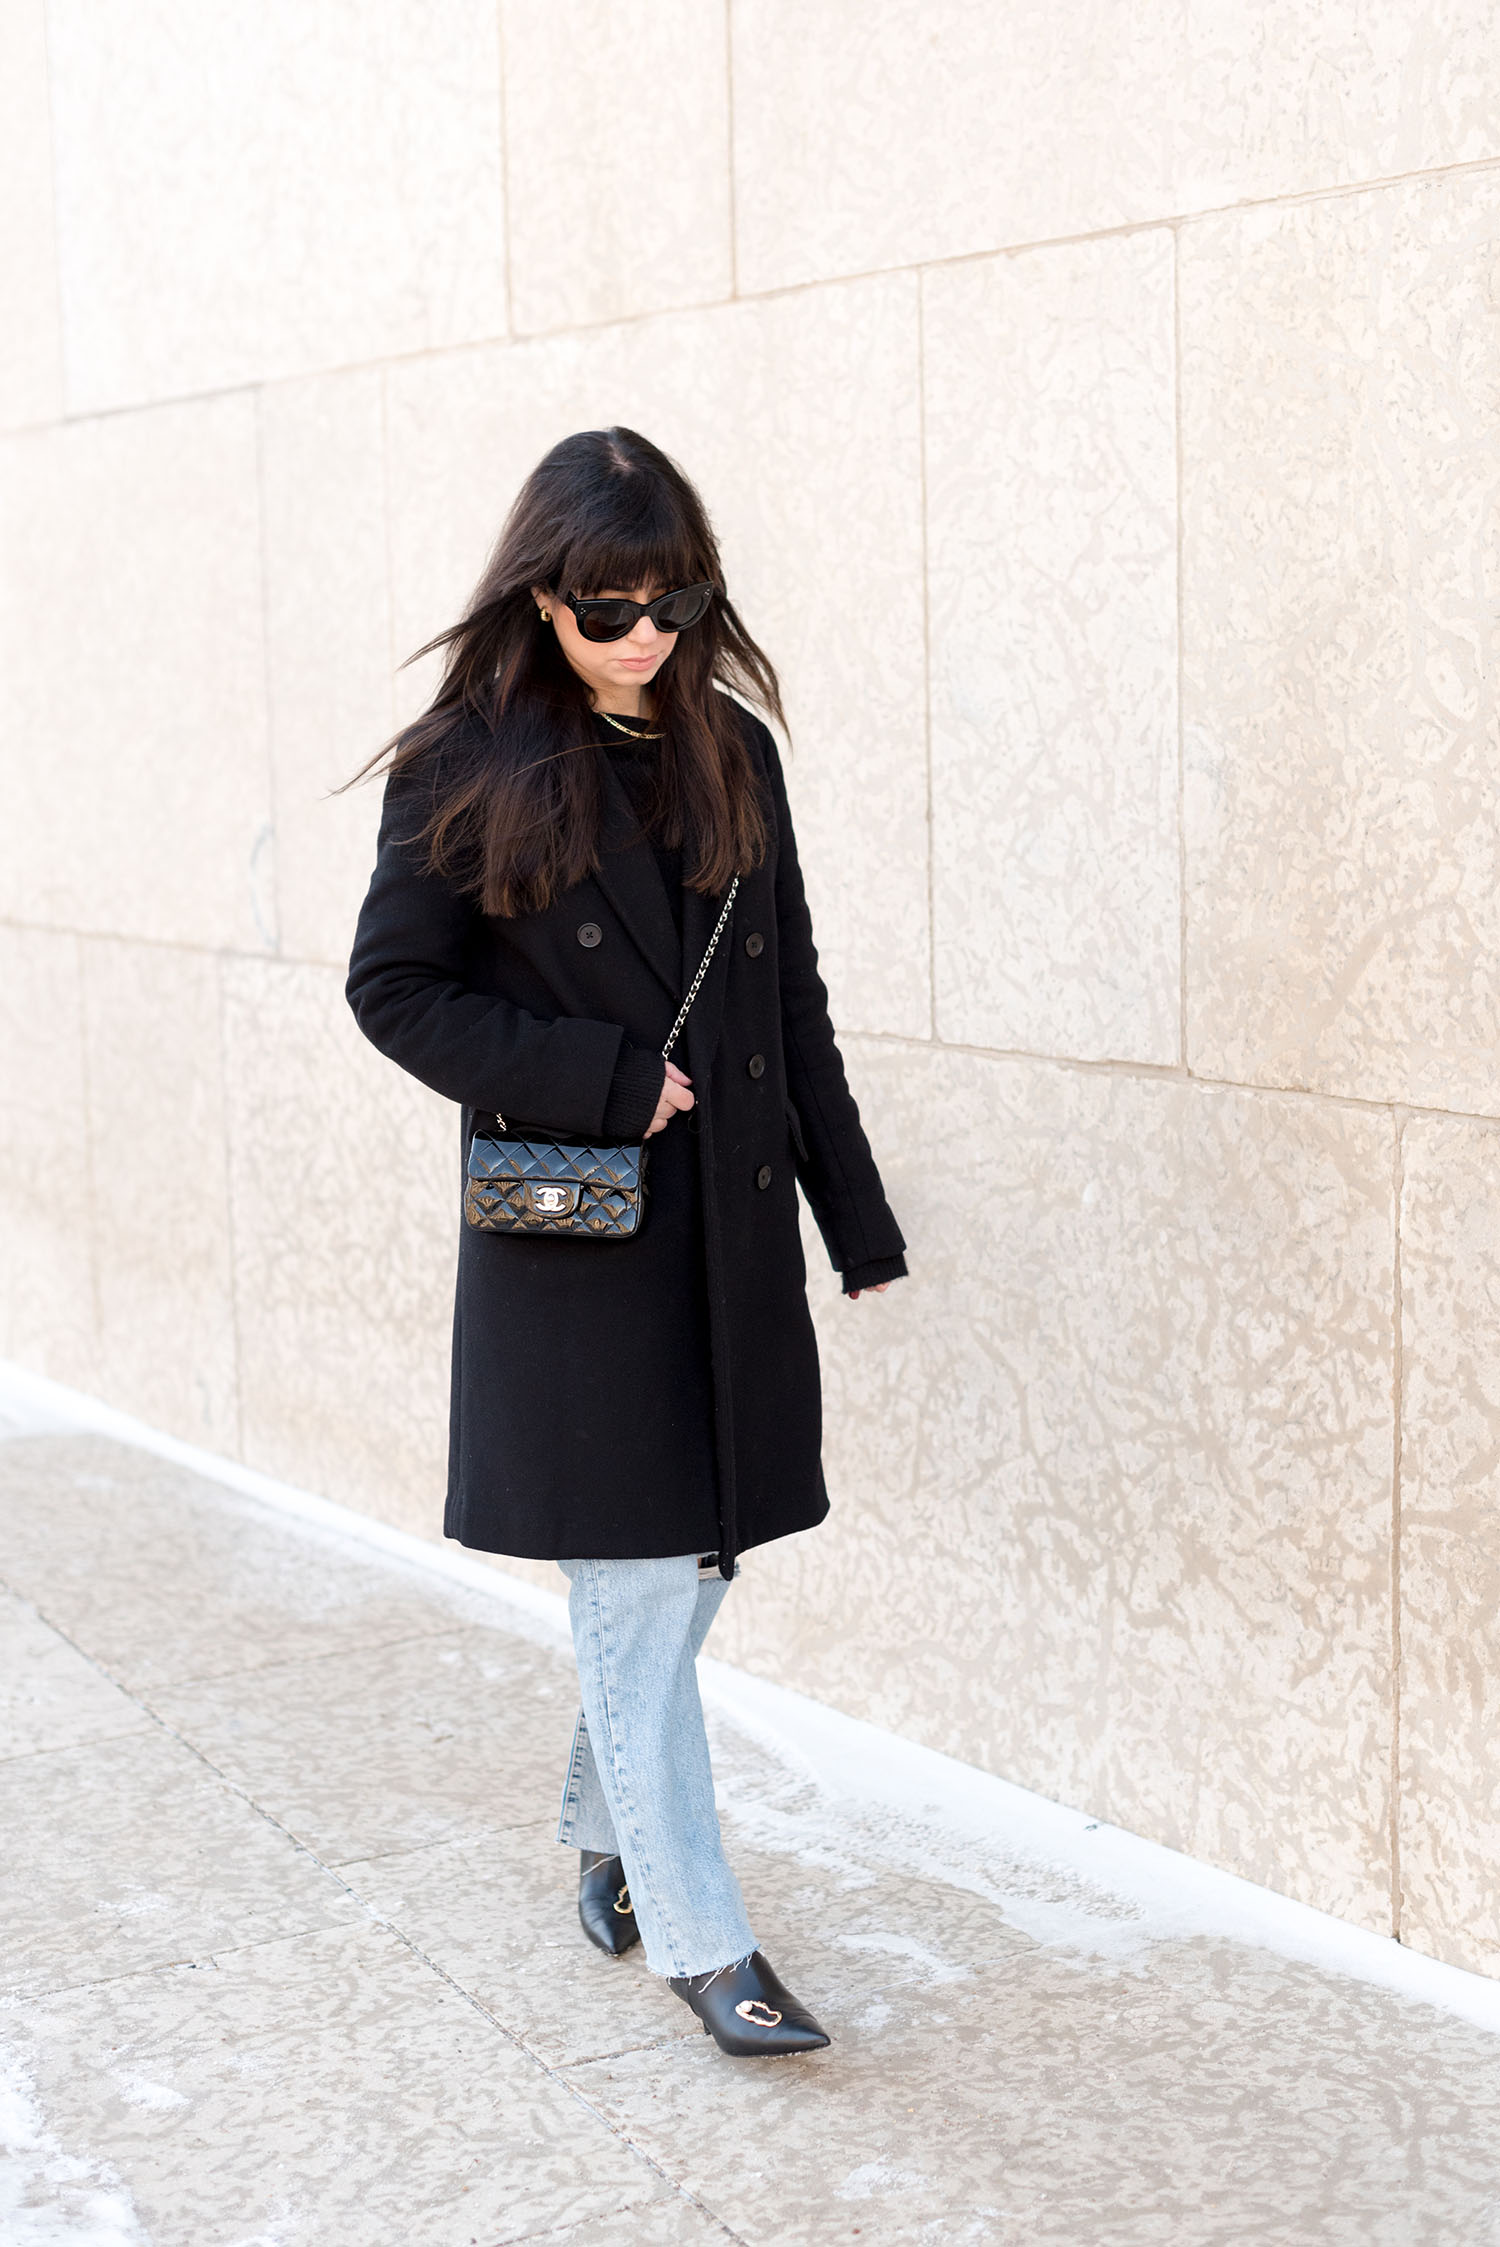 Coco & Vera - Chanel extra mini quilted handbag, Mavi Barcelona jeans, Flattered boots